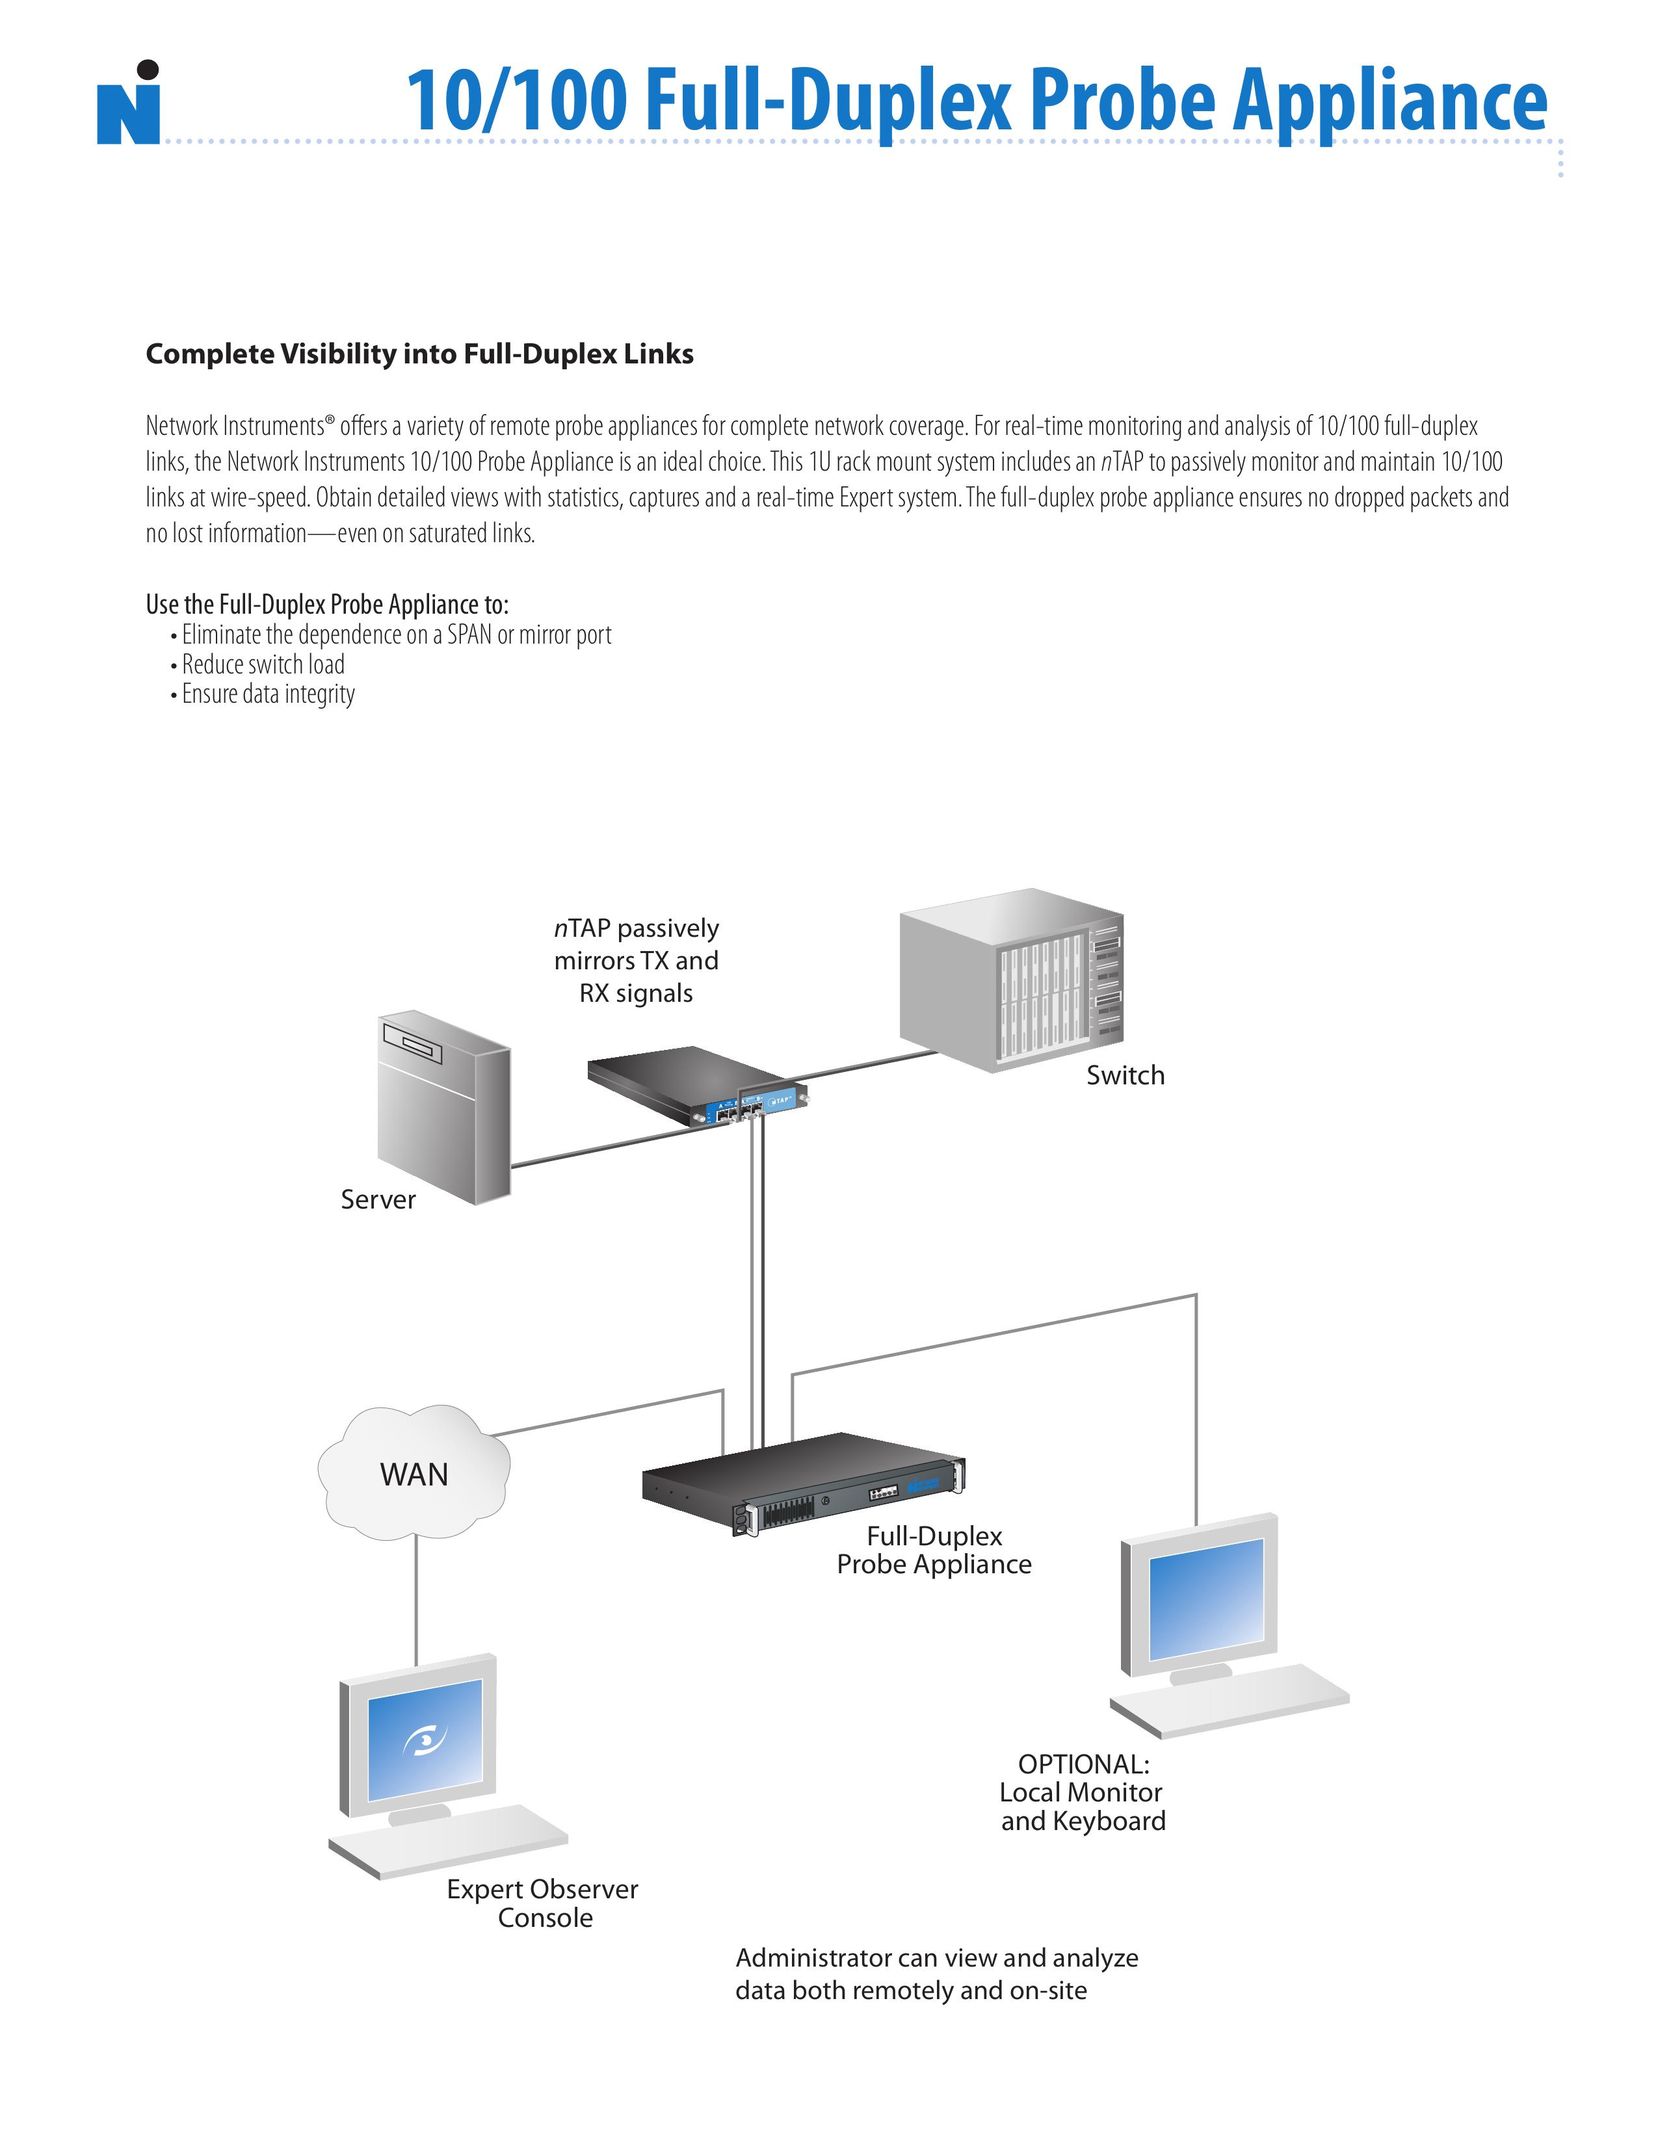 Network Instruments 10/100 Full-Duplex Network Card User Manual